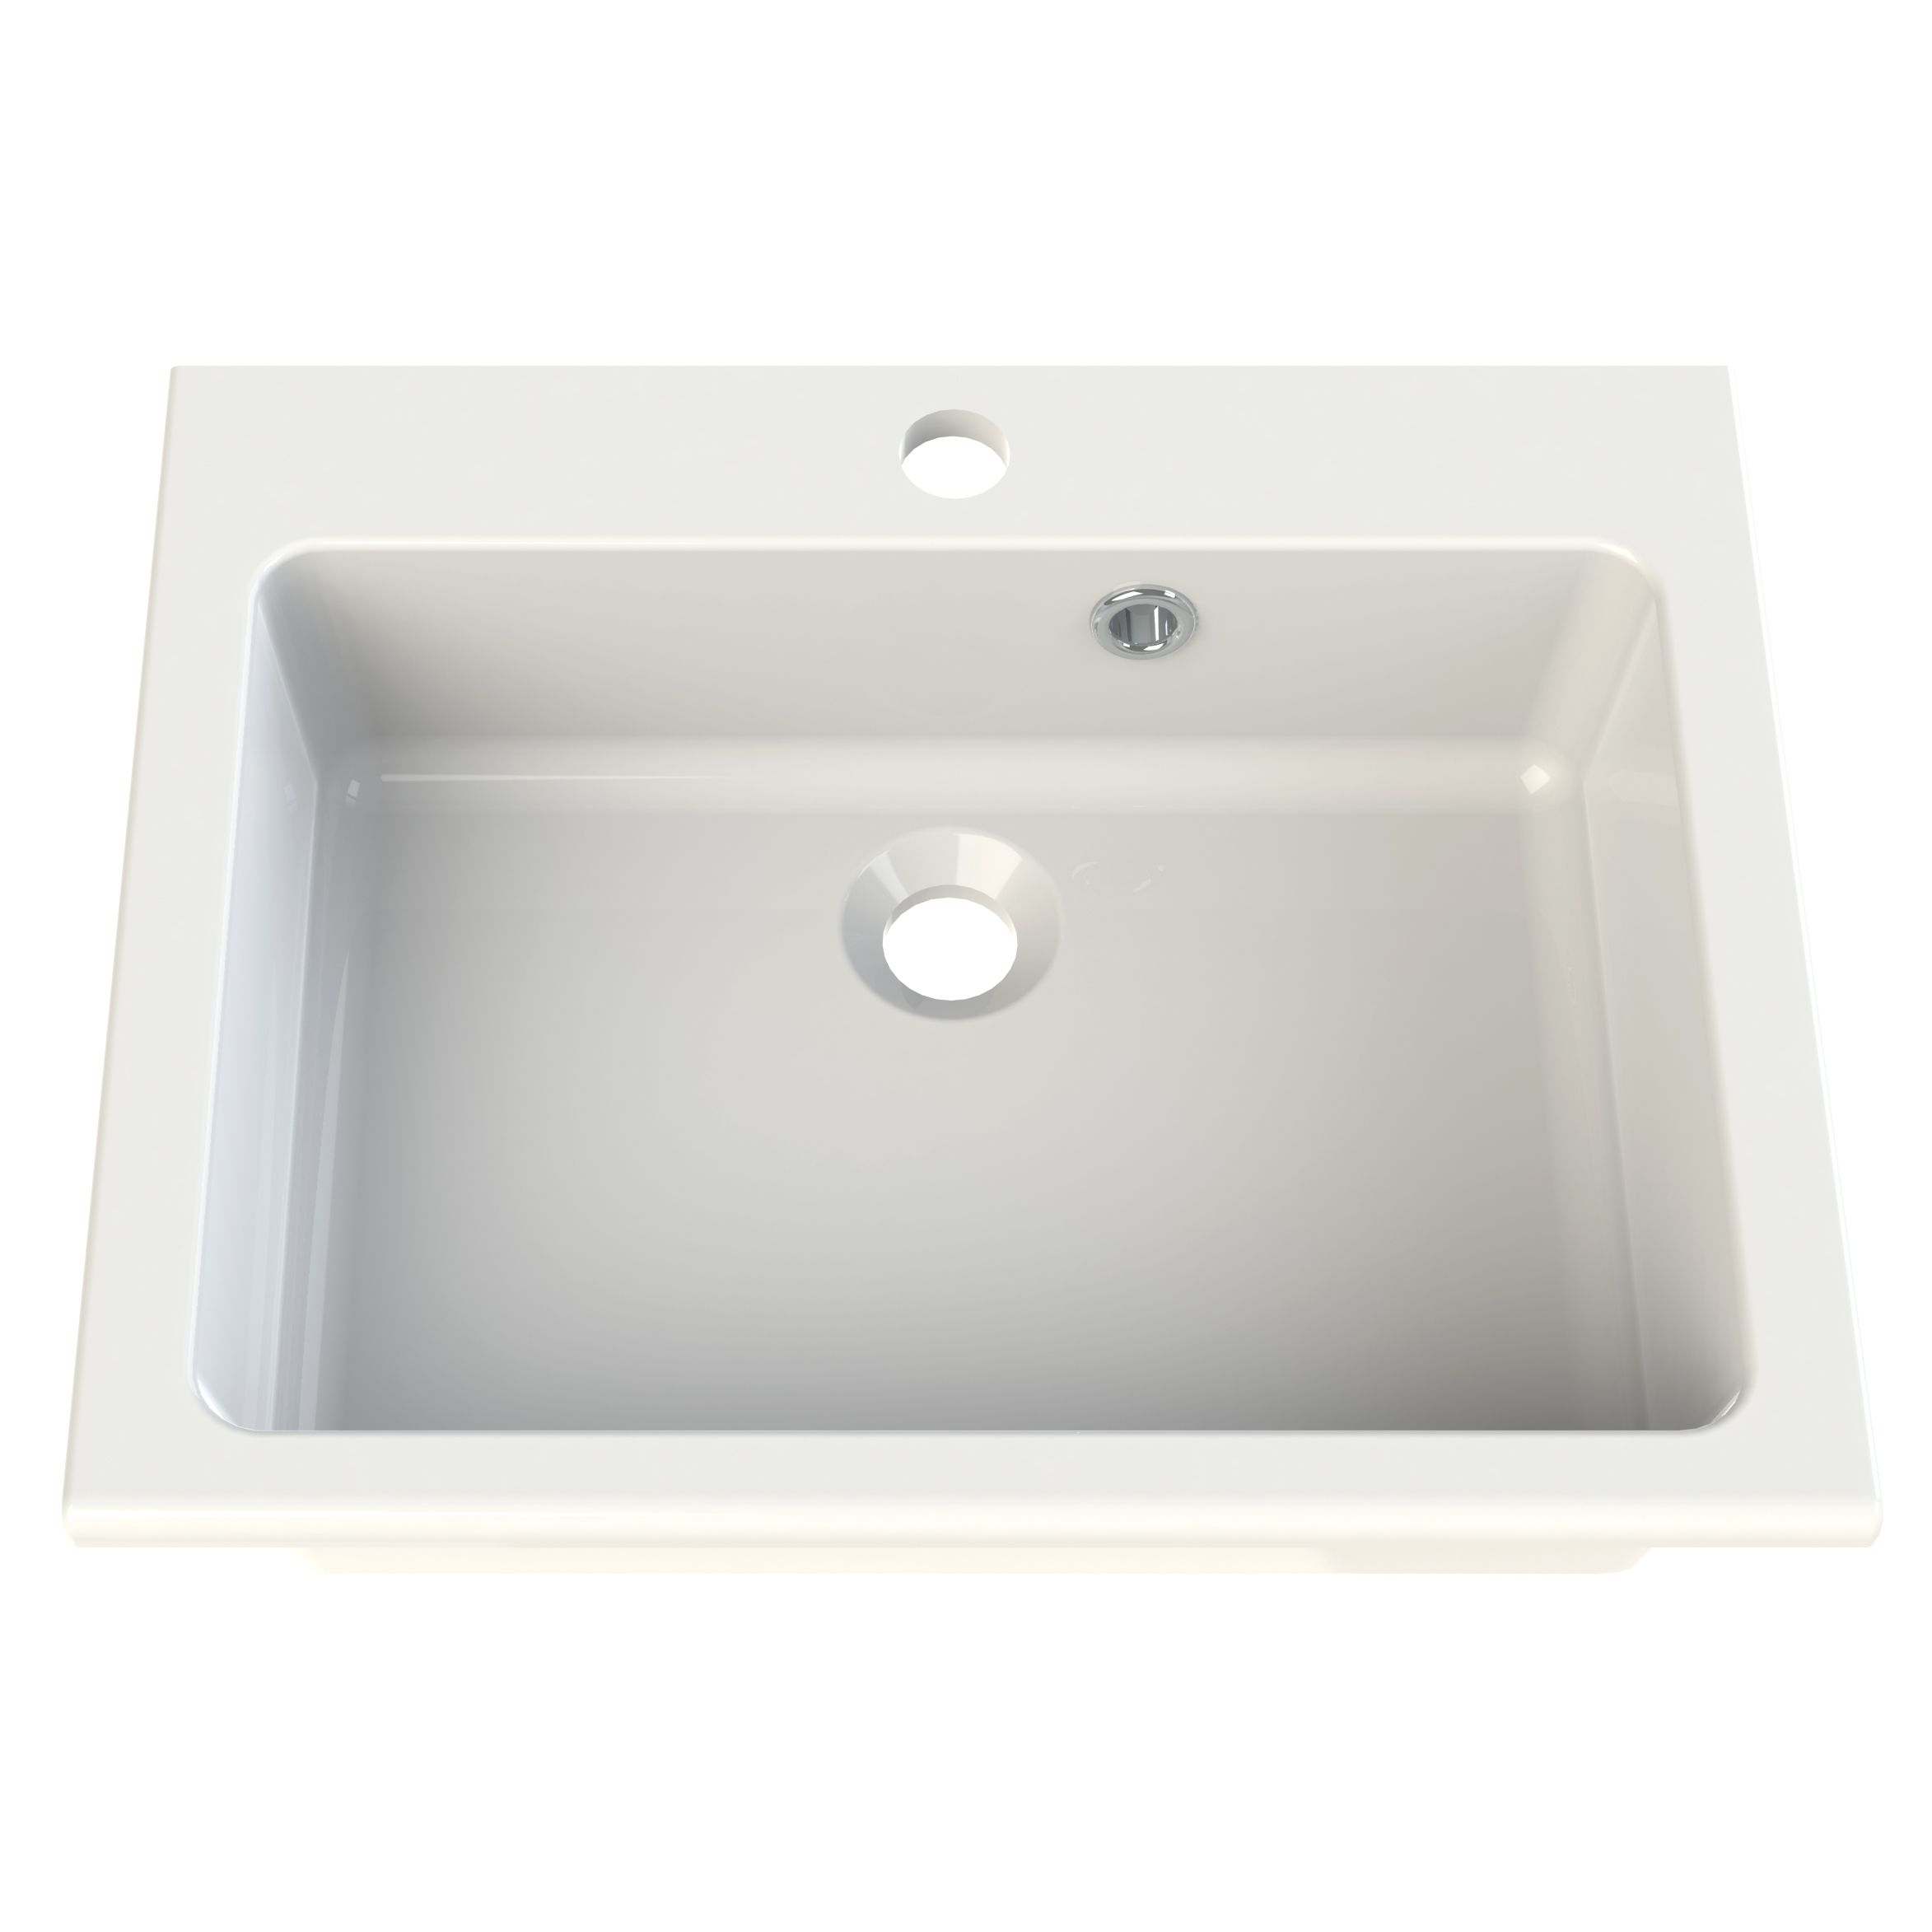  Built-in washbasin 50 cm rectangular